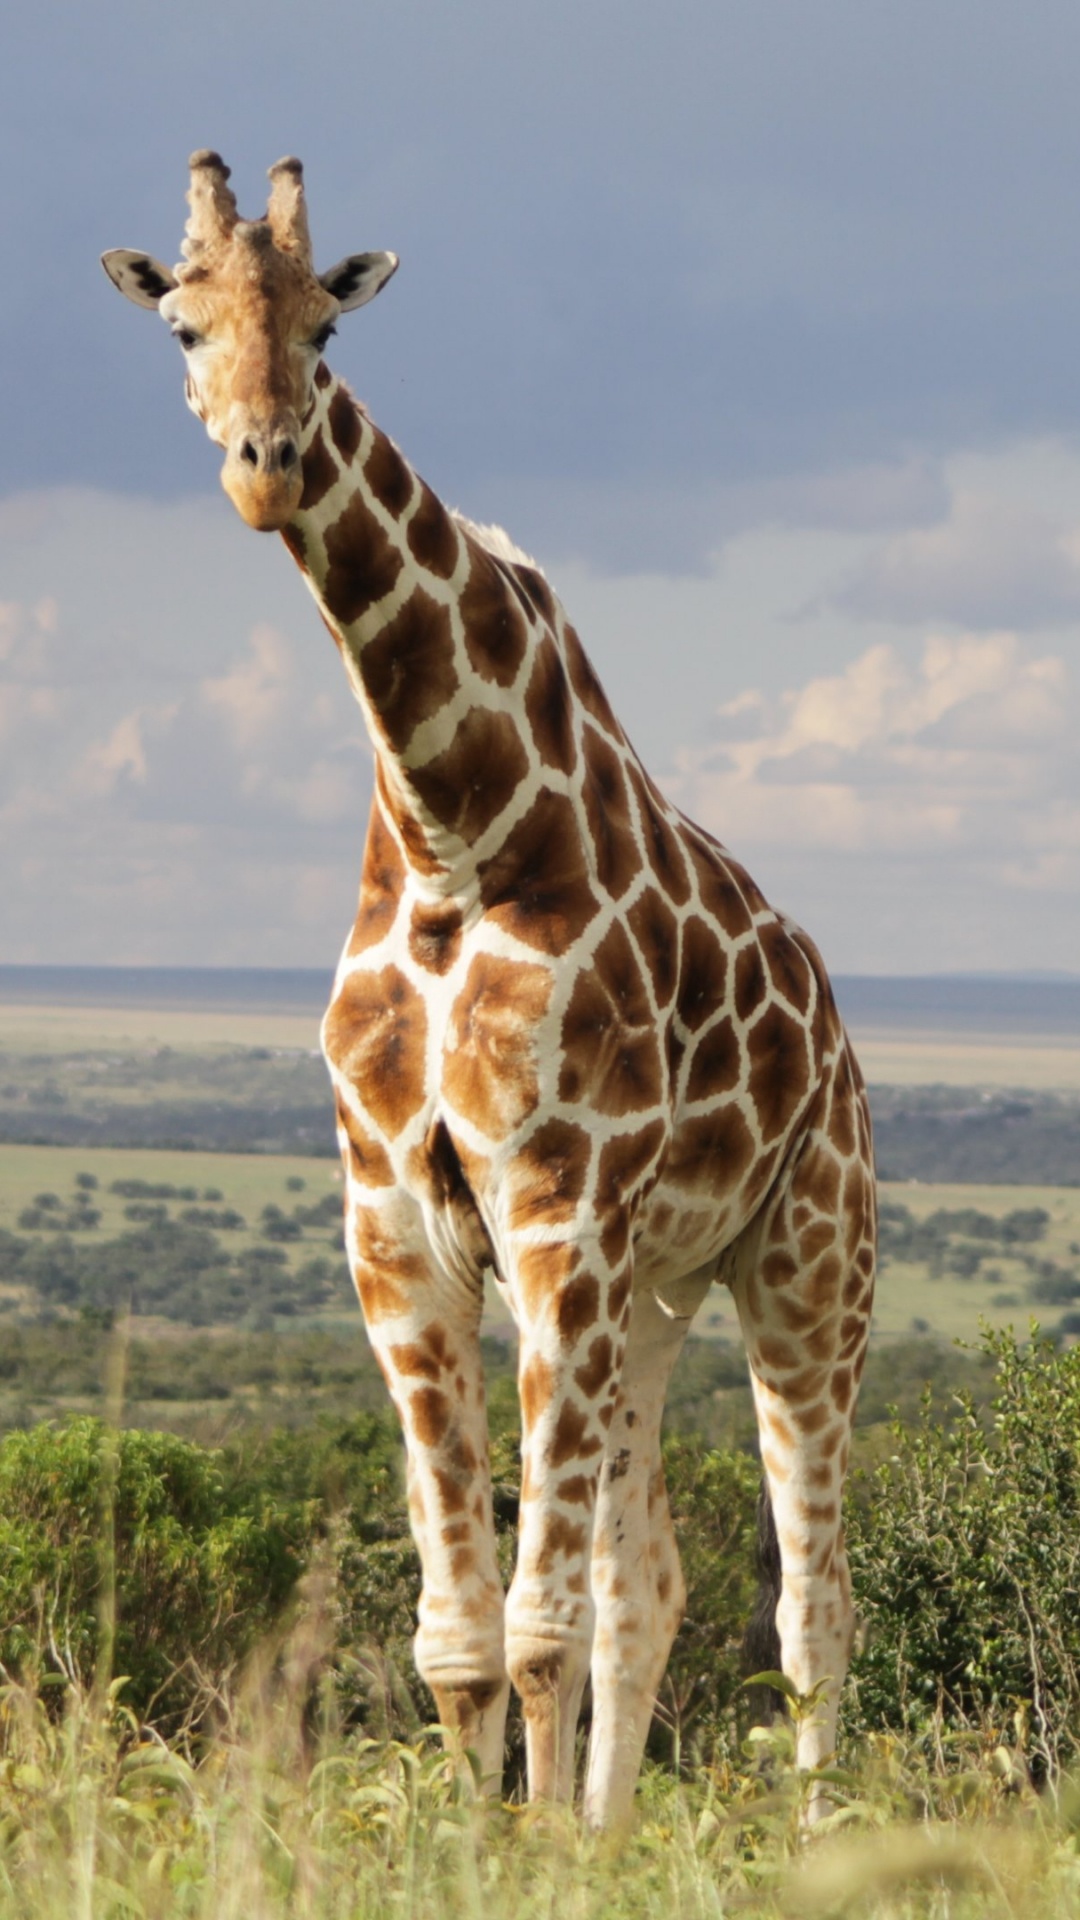 Giraffe Standing on Green Grass Field During Daytime. Wallpaper in 1080x1920 Resolution